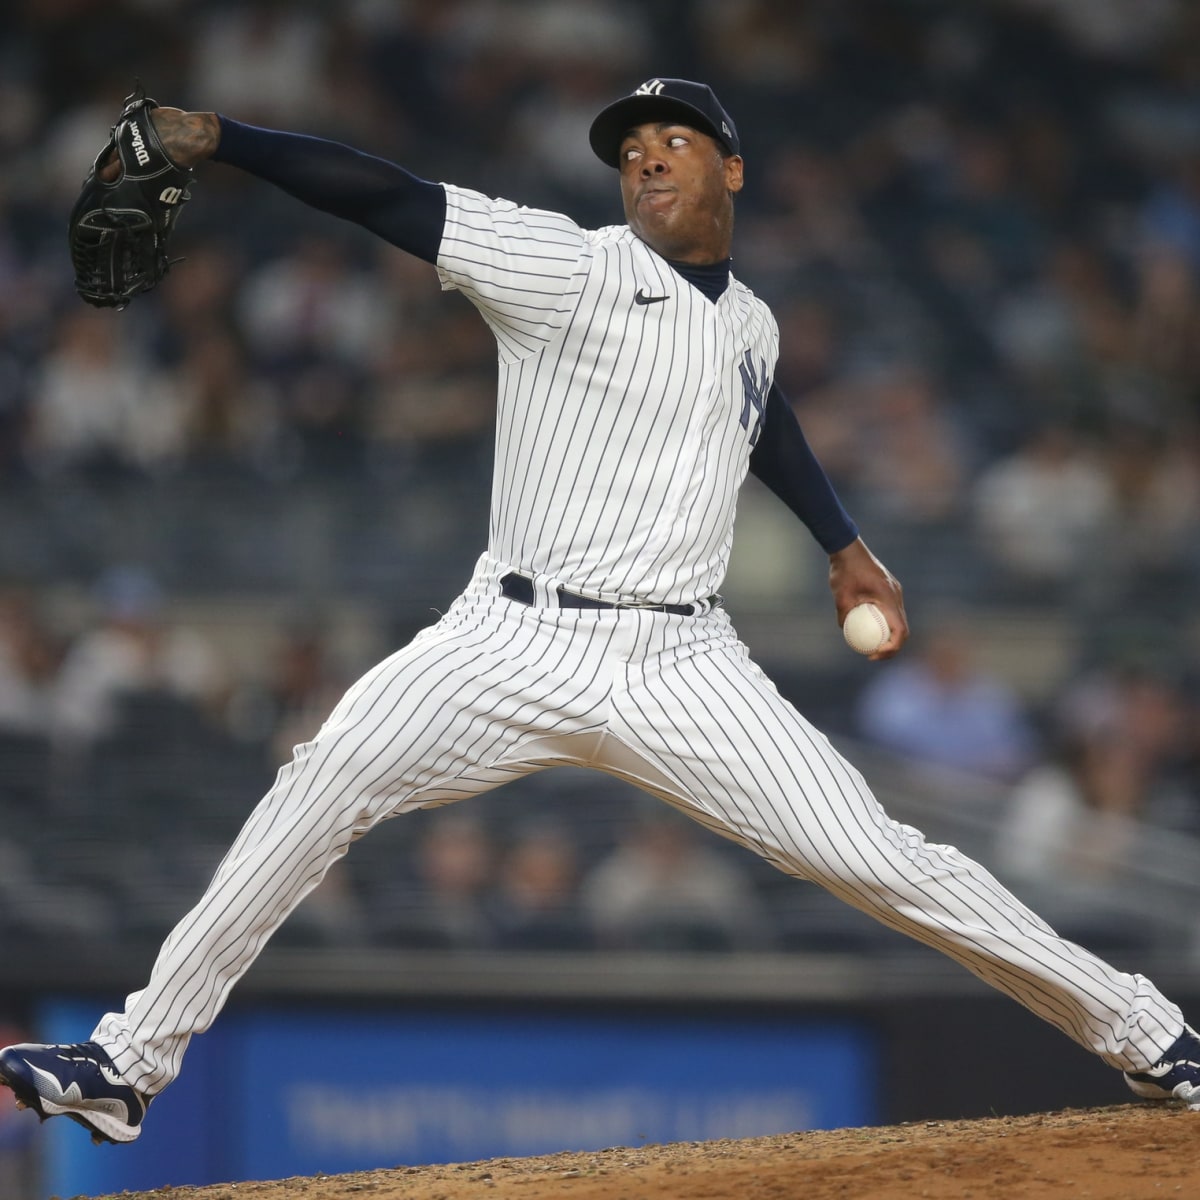 New York Yankees closer Aroldis Chapman has elbow injury - Sports